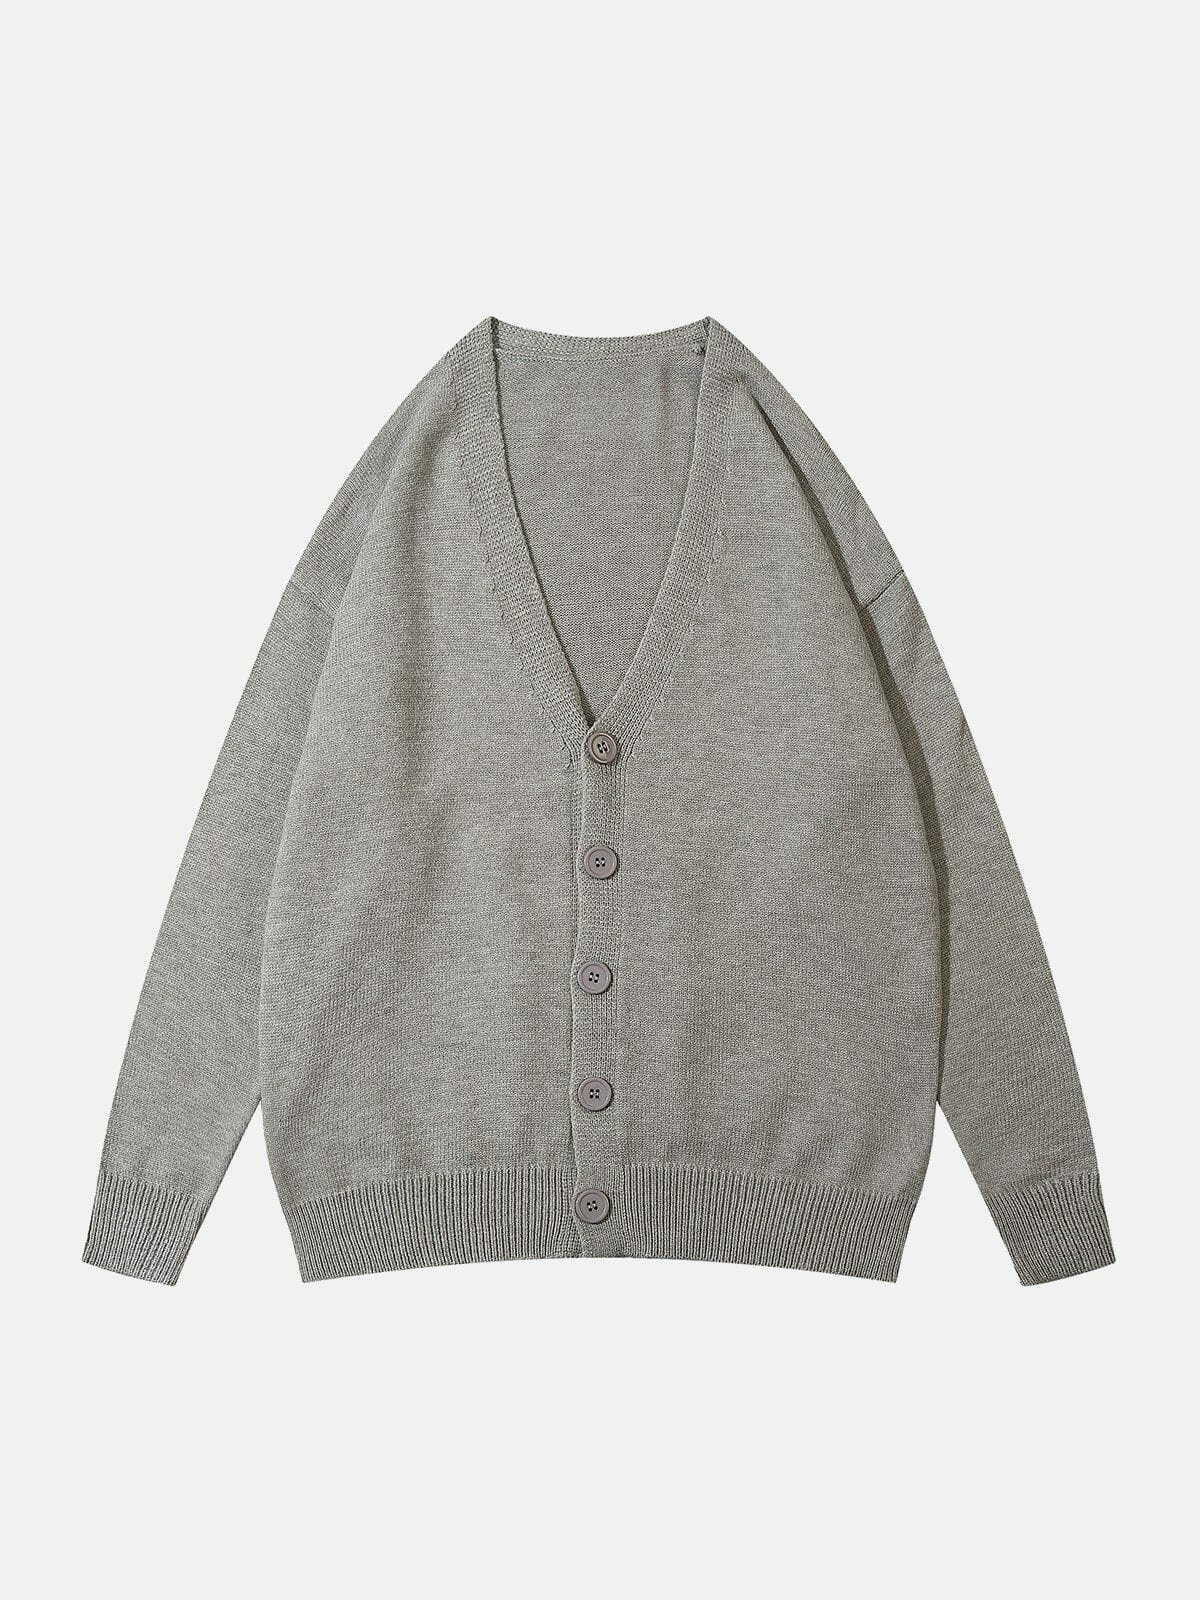 quirky knit cardigan cozy & youthful streetwear 8476